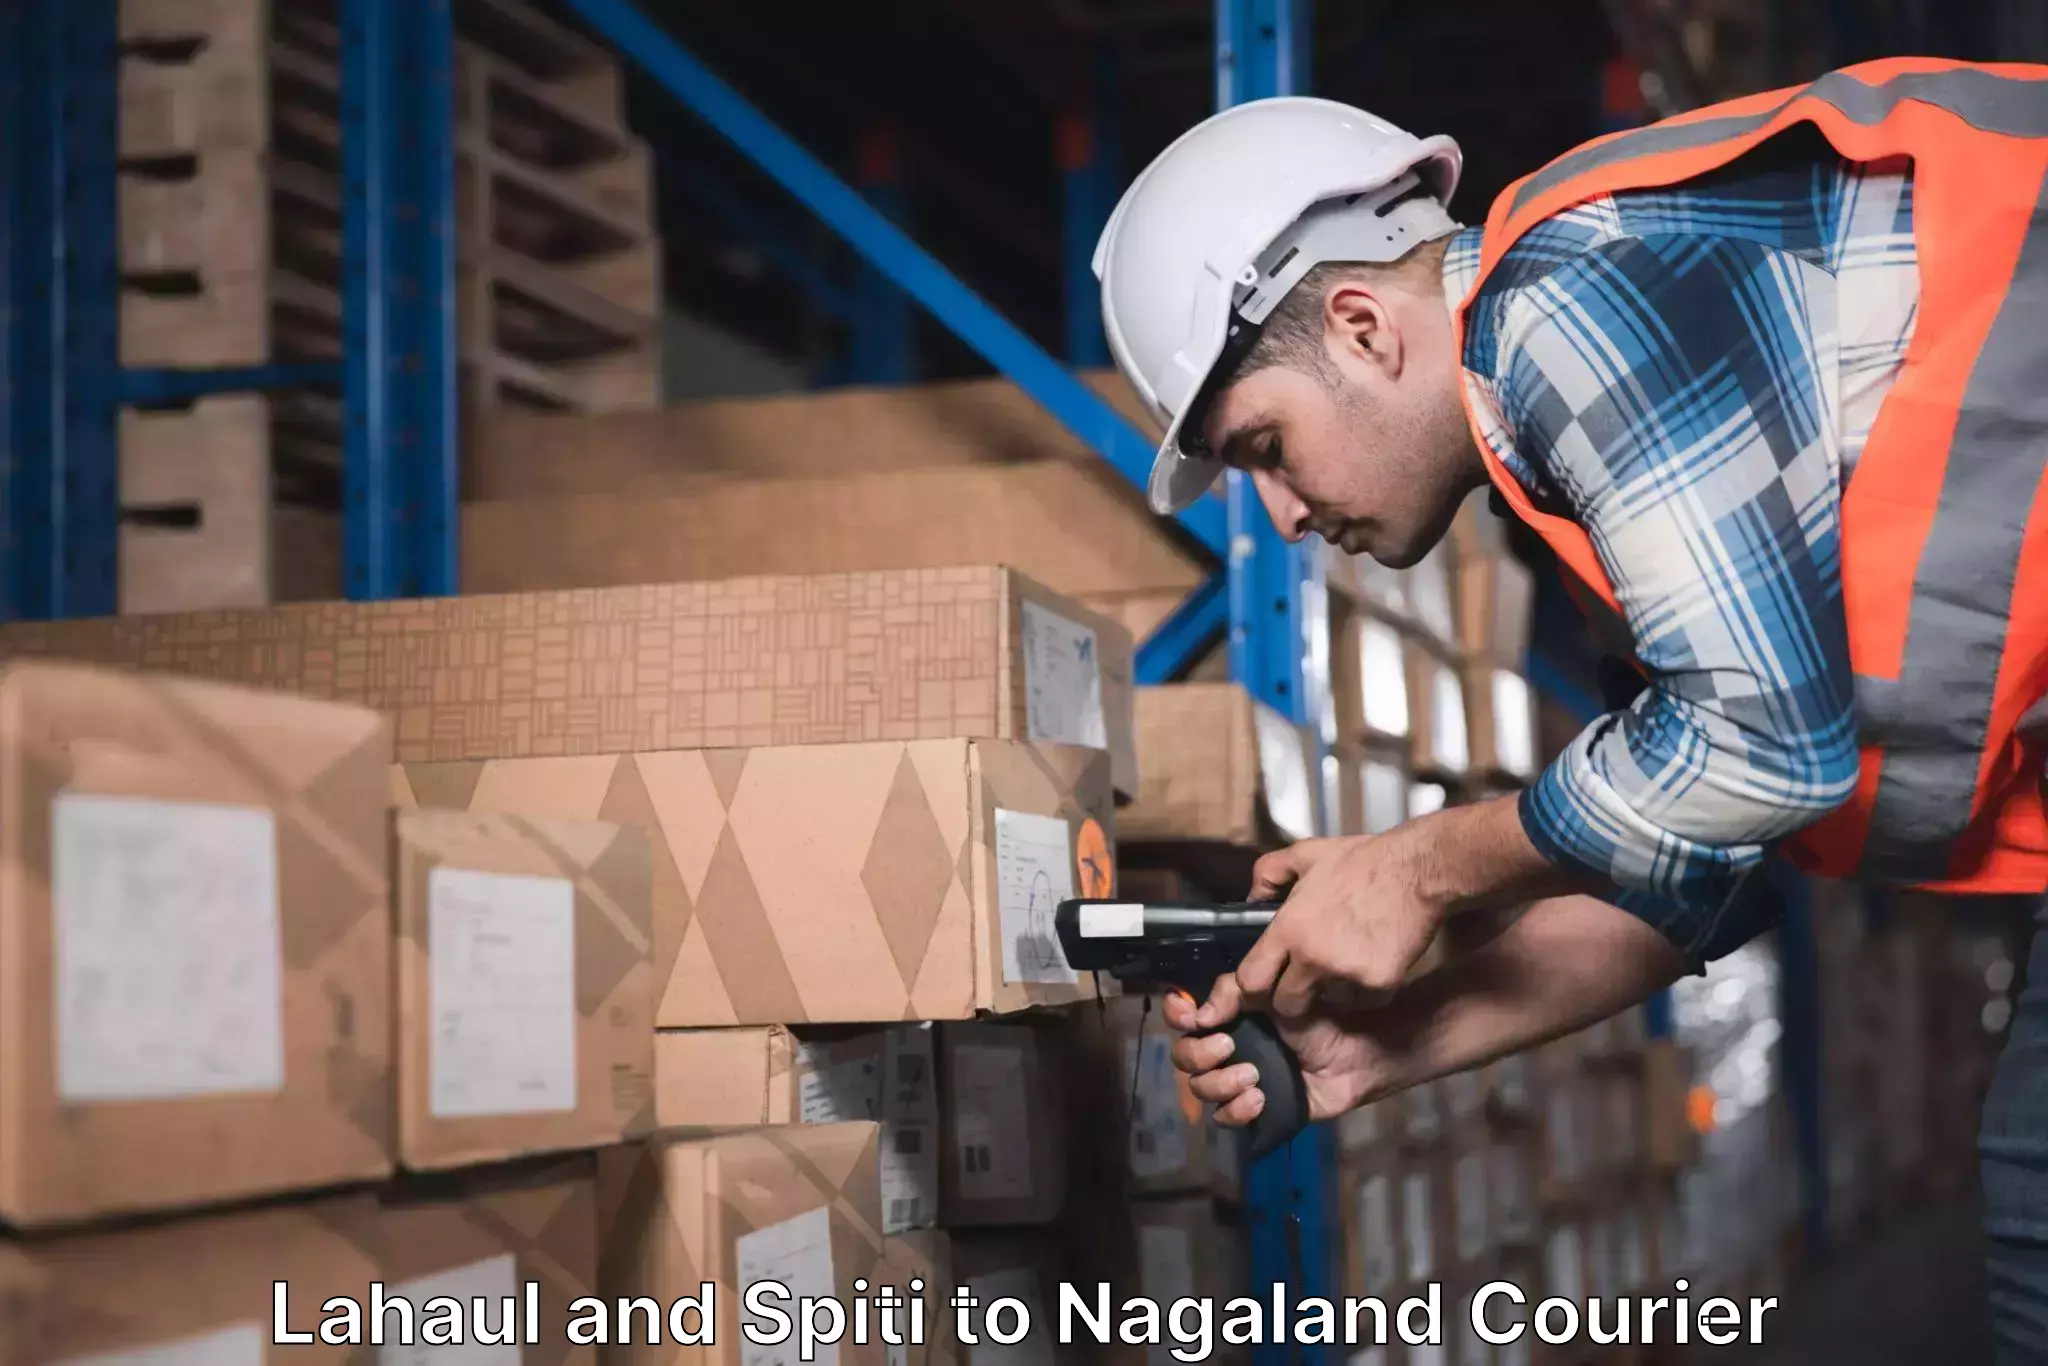 Digital courier platforms Lahaul and Spiti to Nagaland